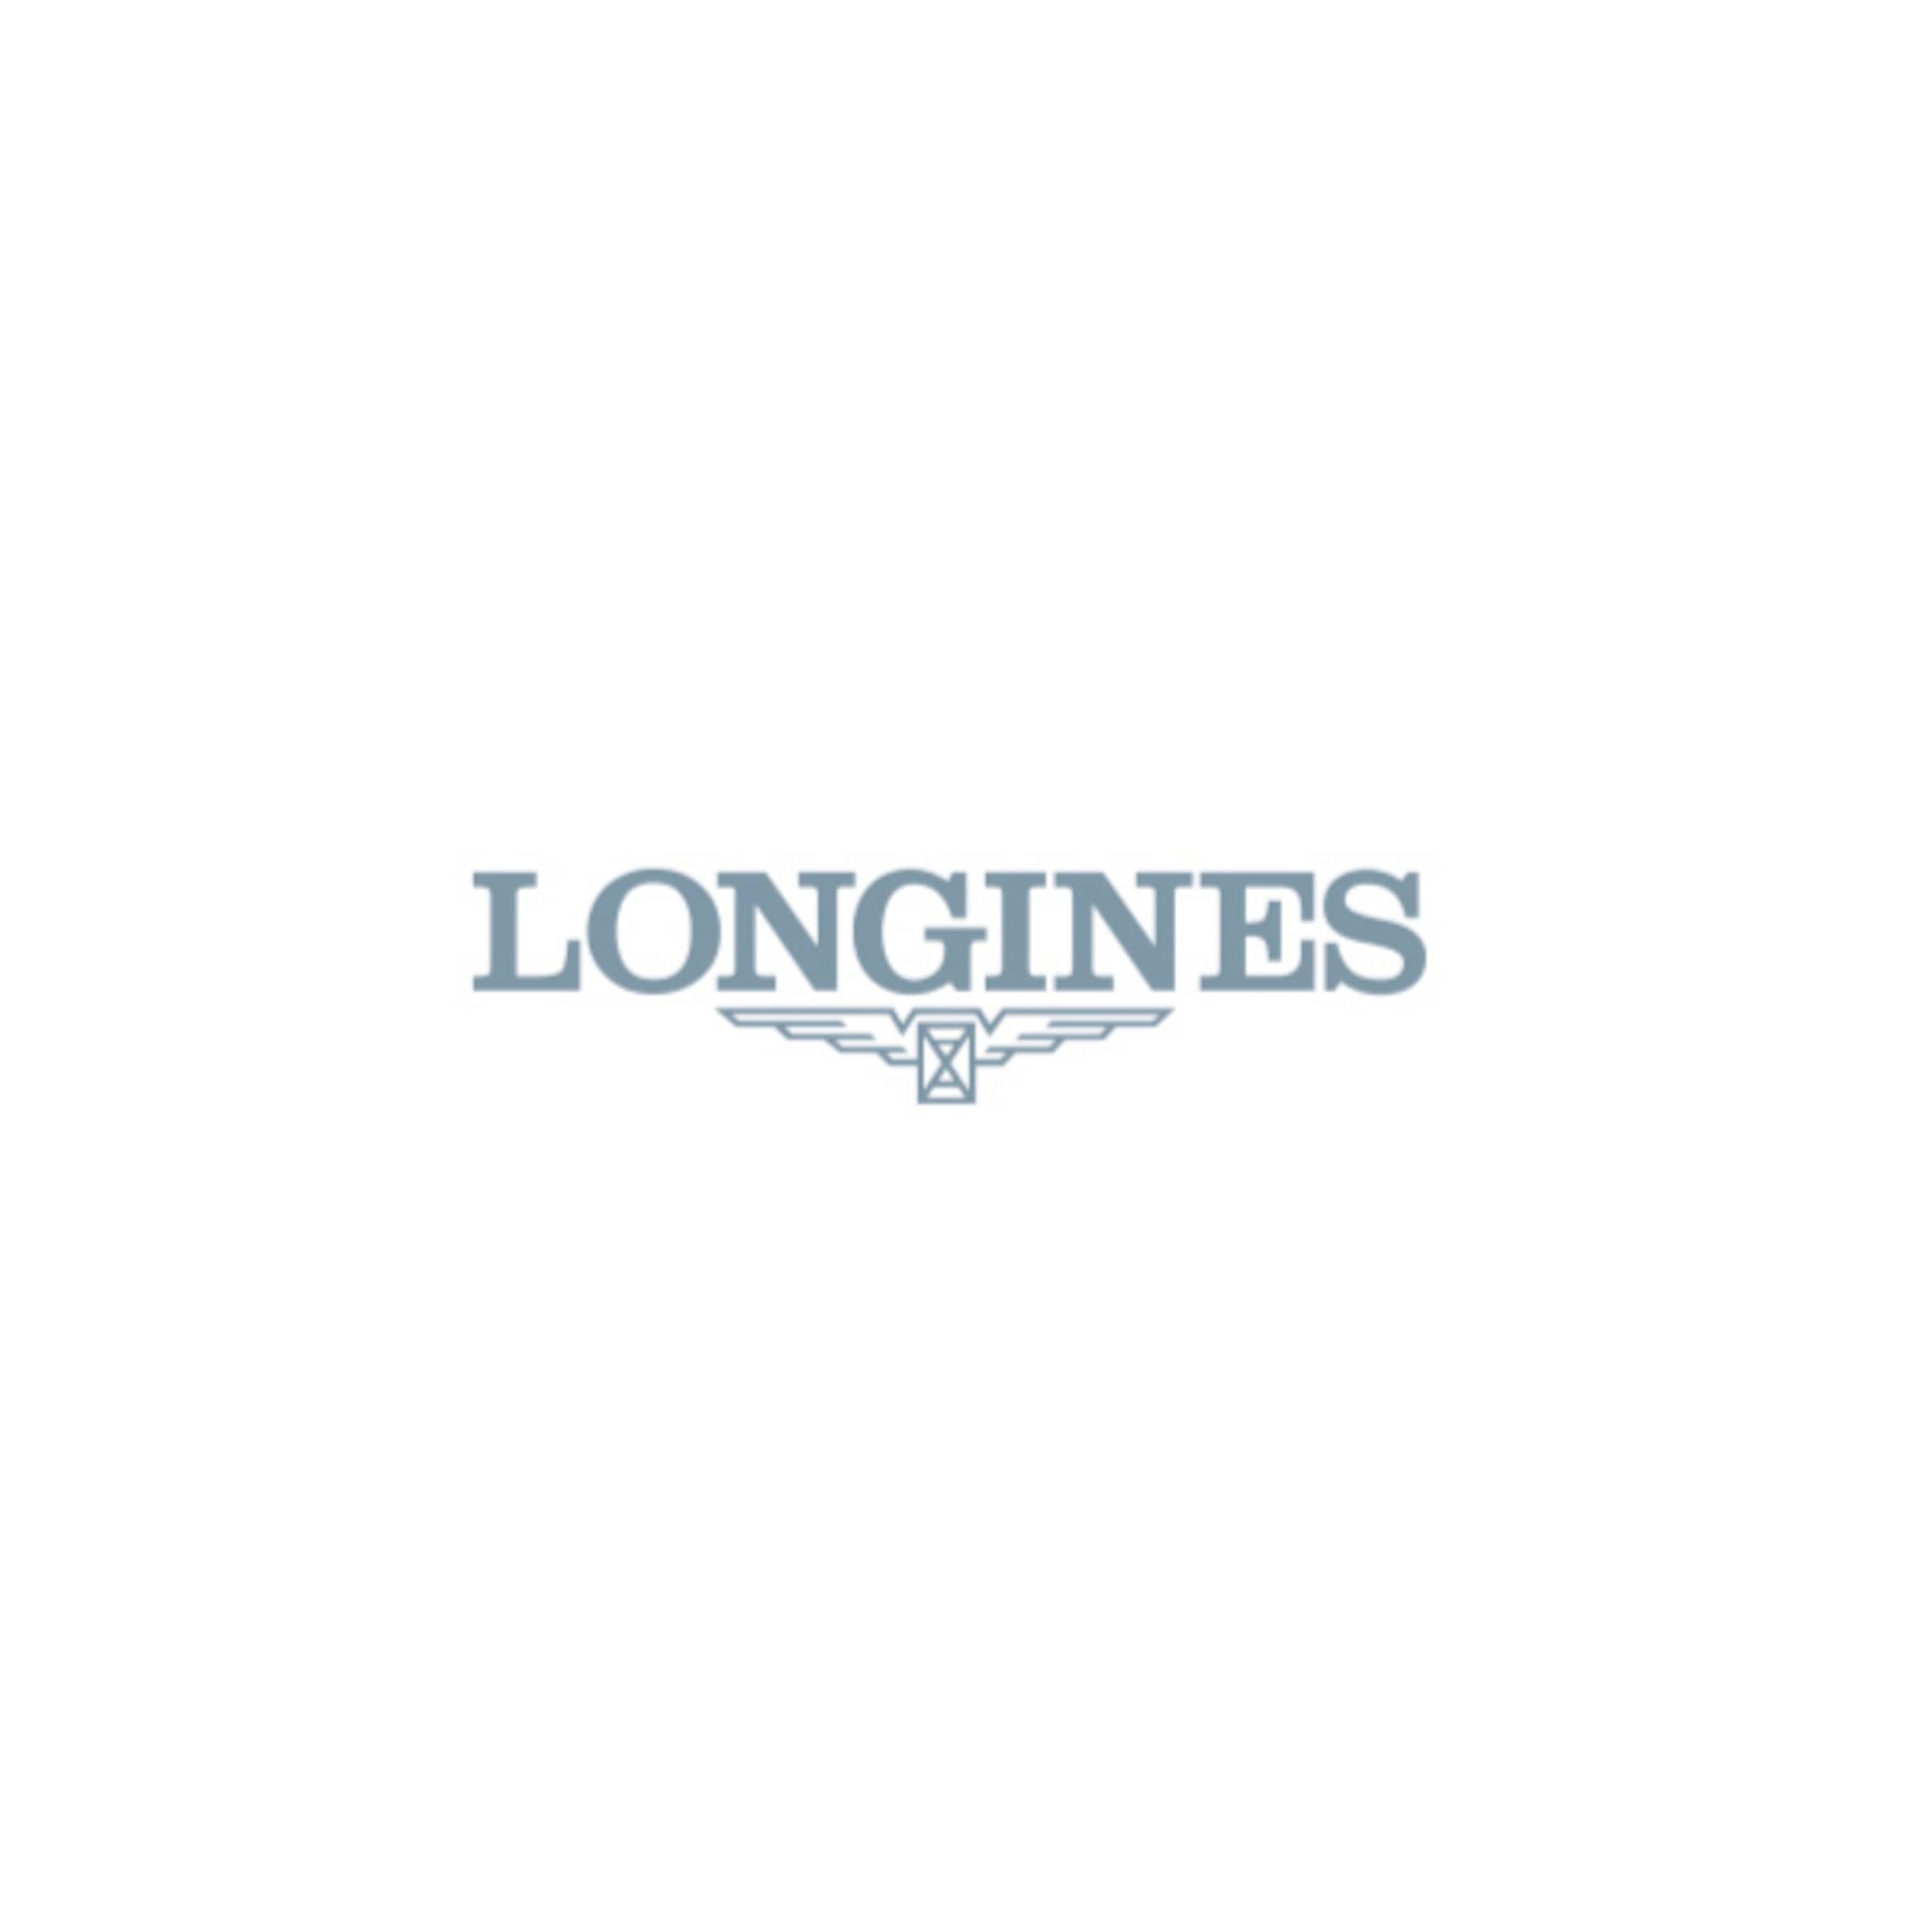 Longines THE LONGINES LEGEND DIVER WATCH Automatic Bronze with Titanium case back Watch - L3.774.1.50.2